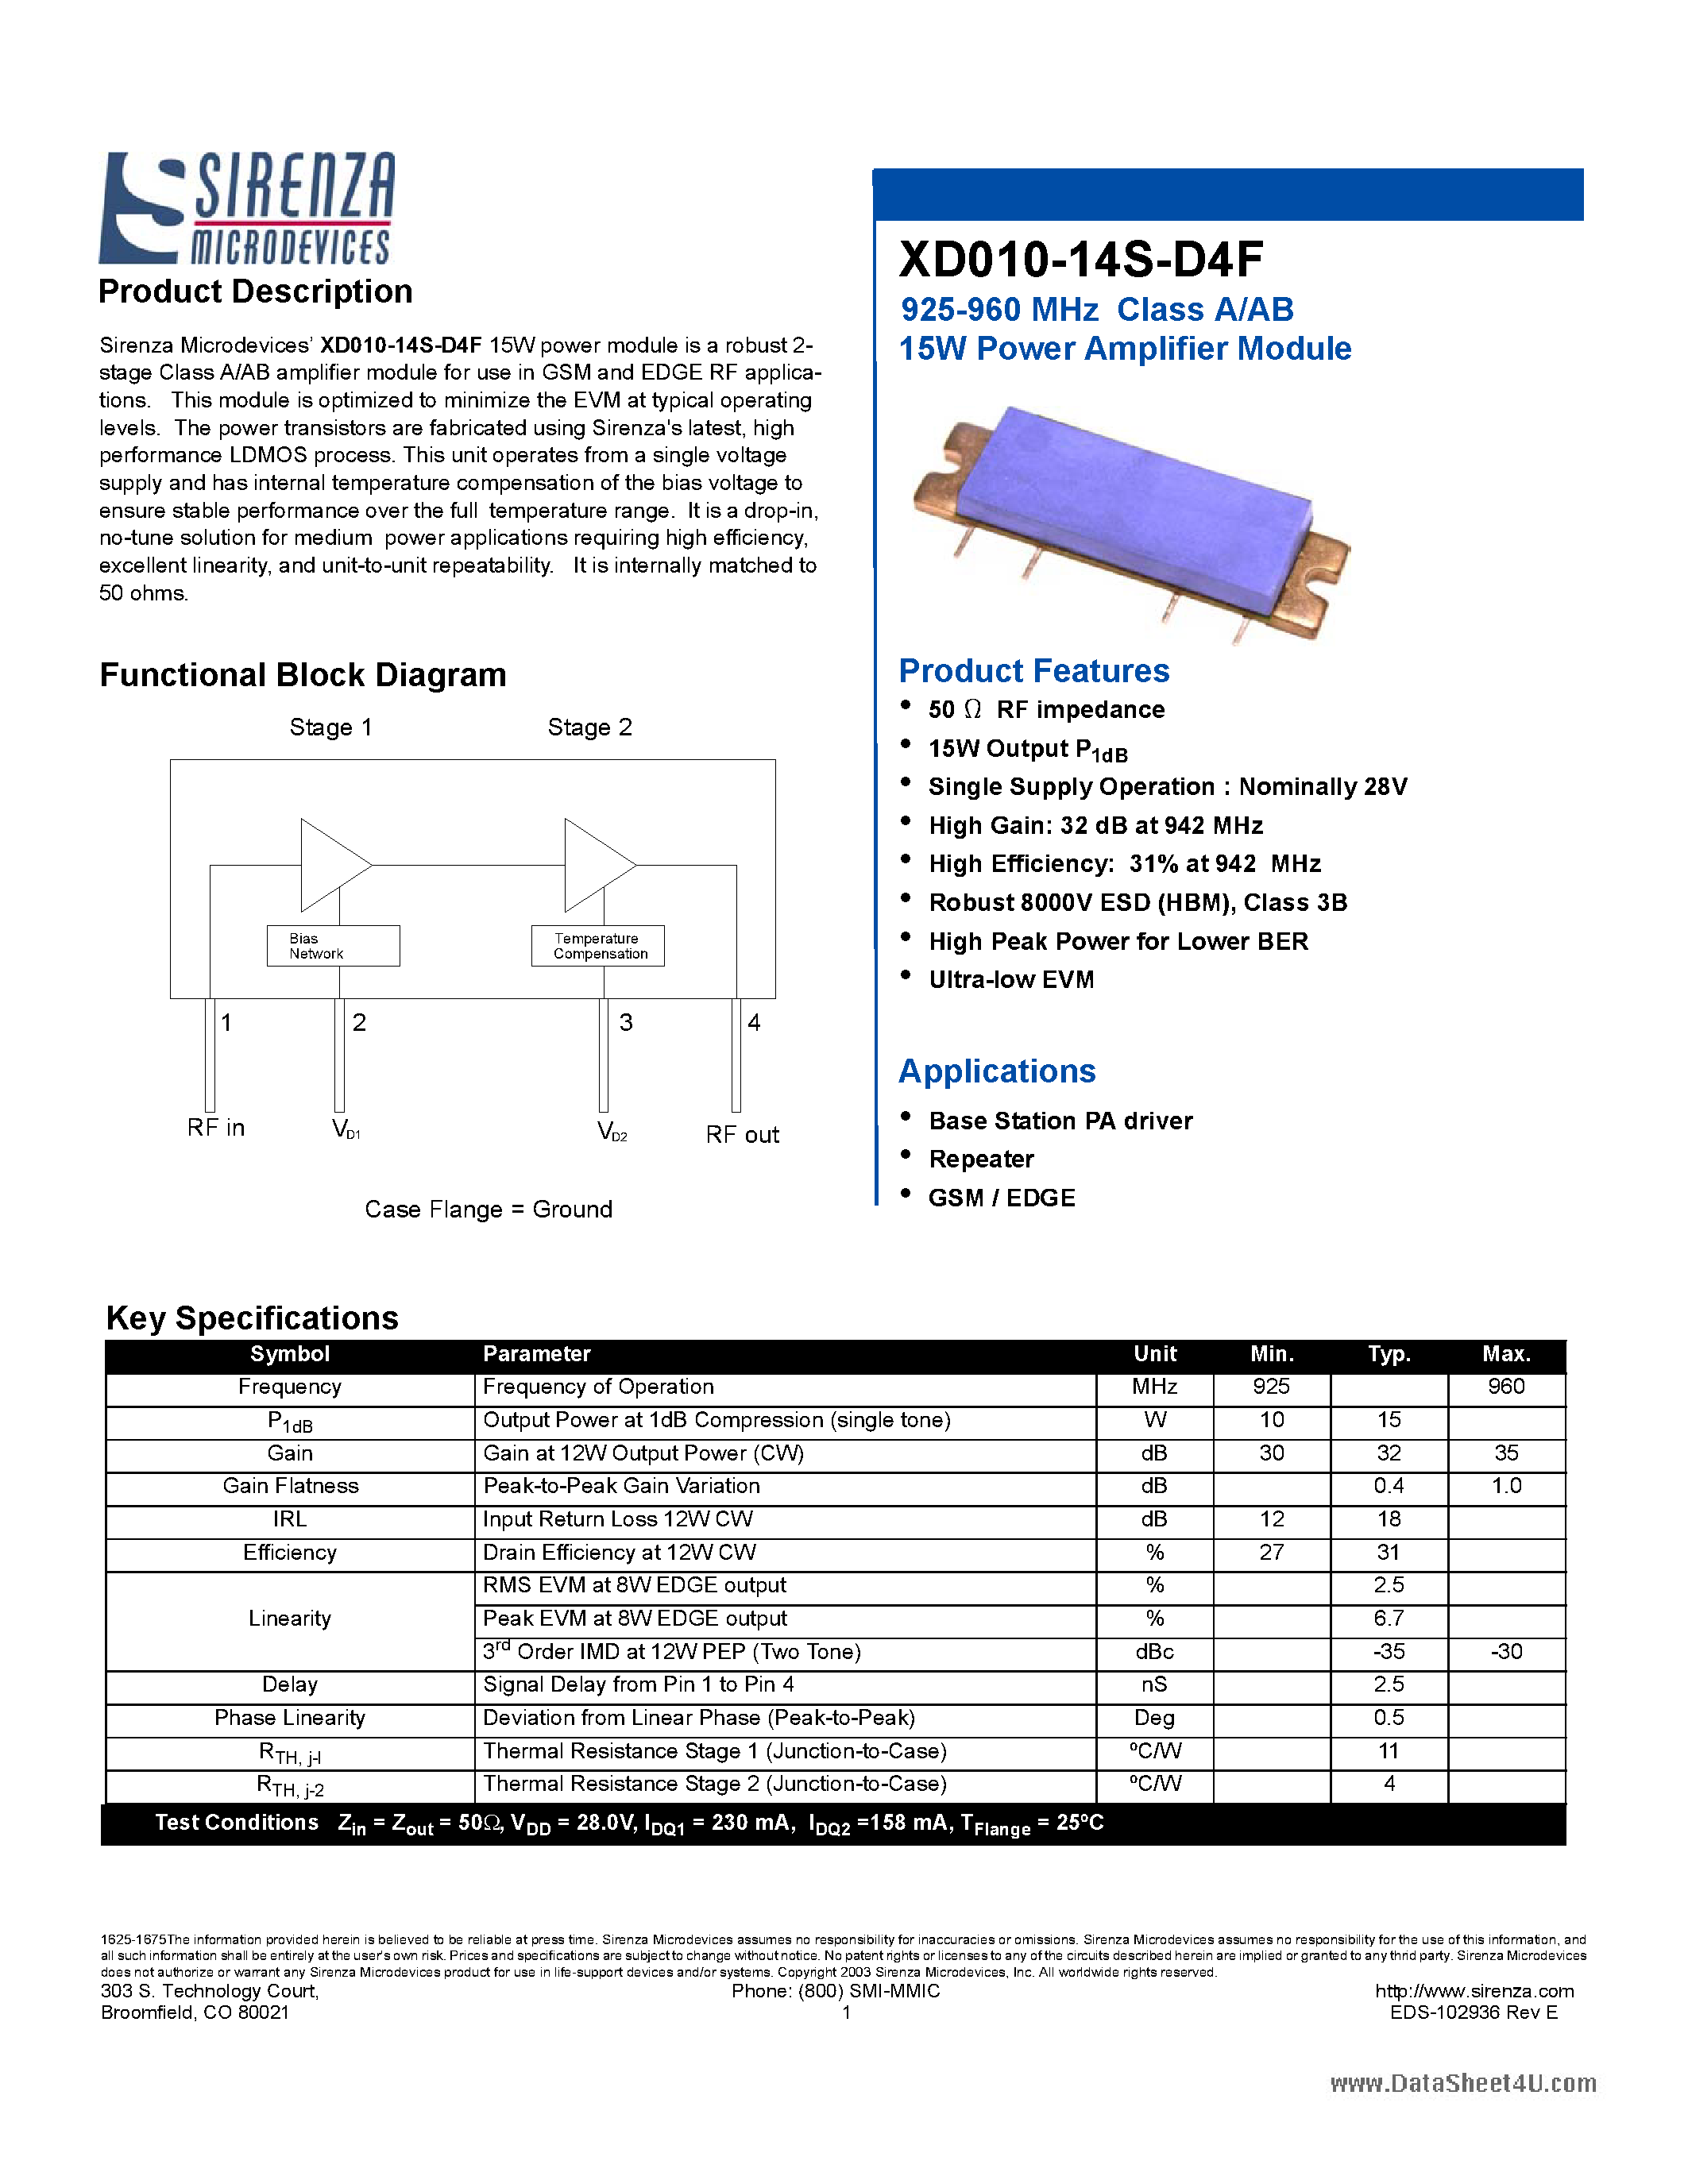 Datasheet XD010-14S-D4F - Class A/AB 15W Power Amplifier Module page 1